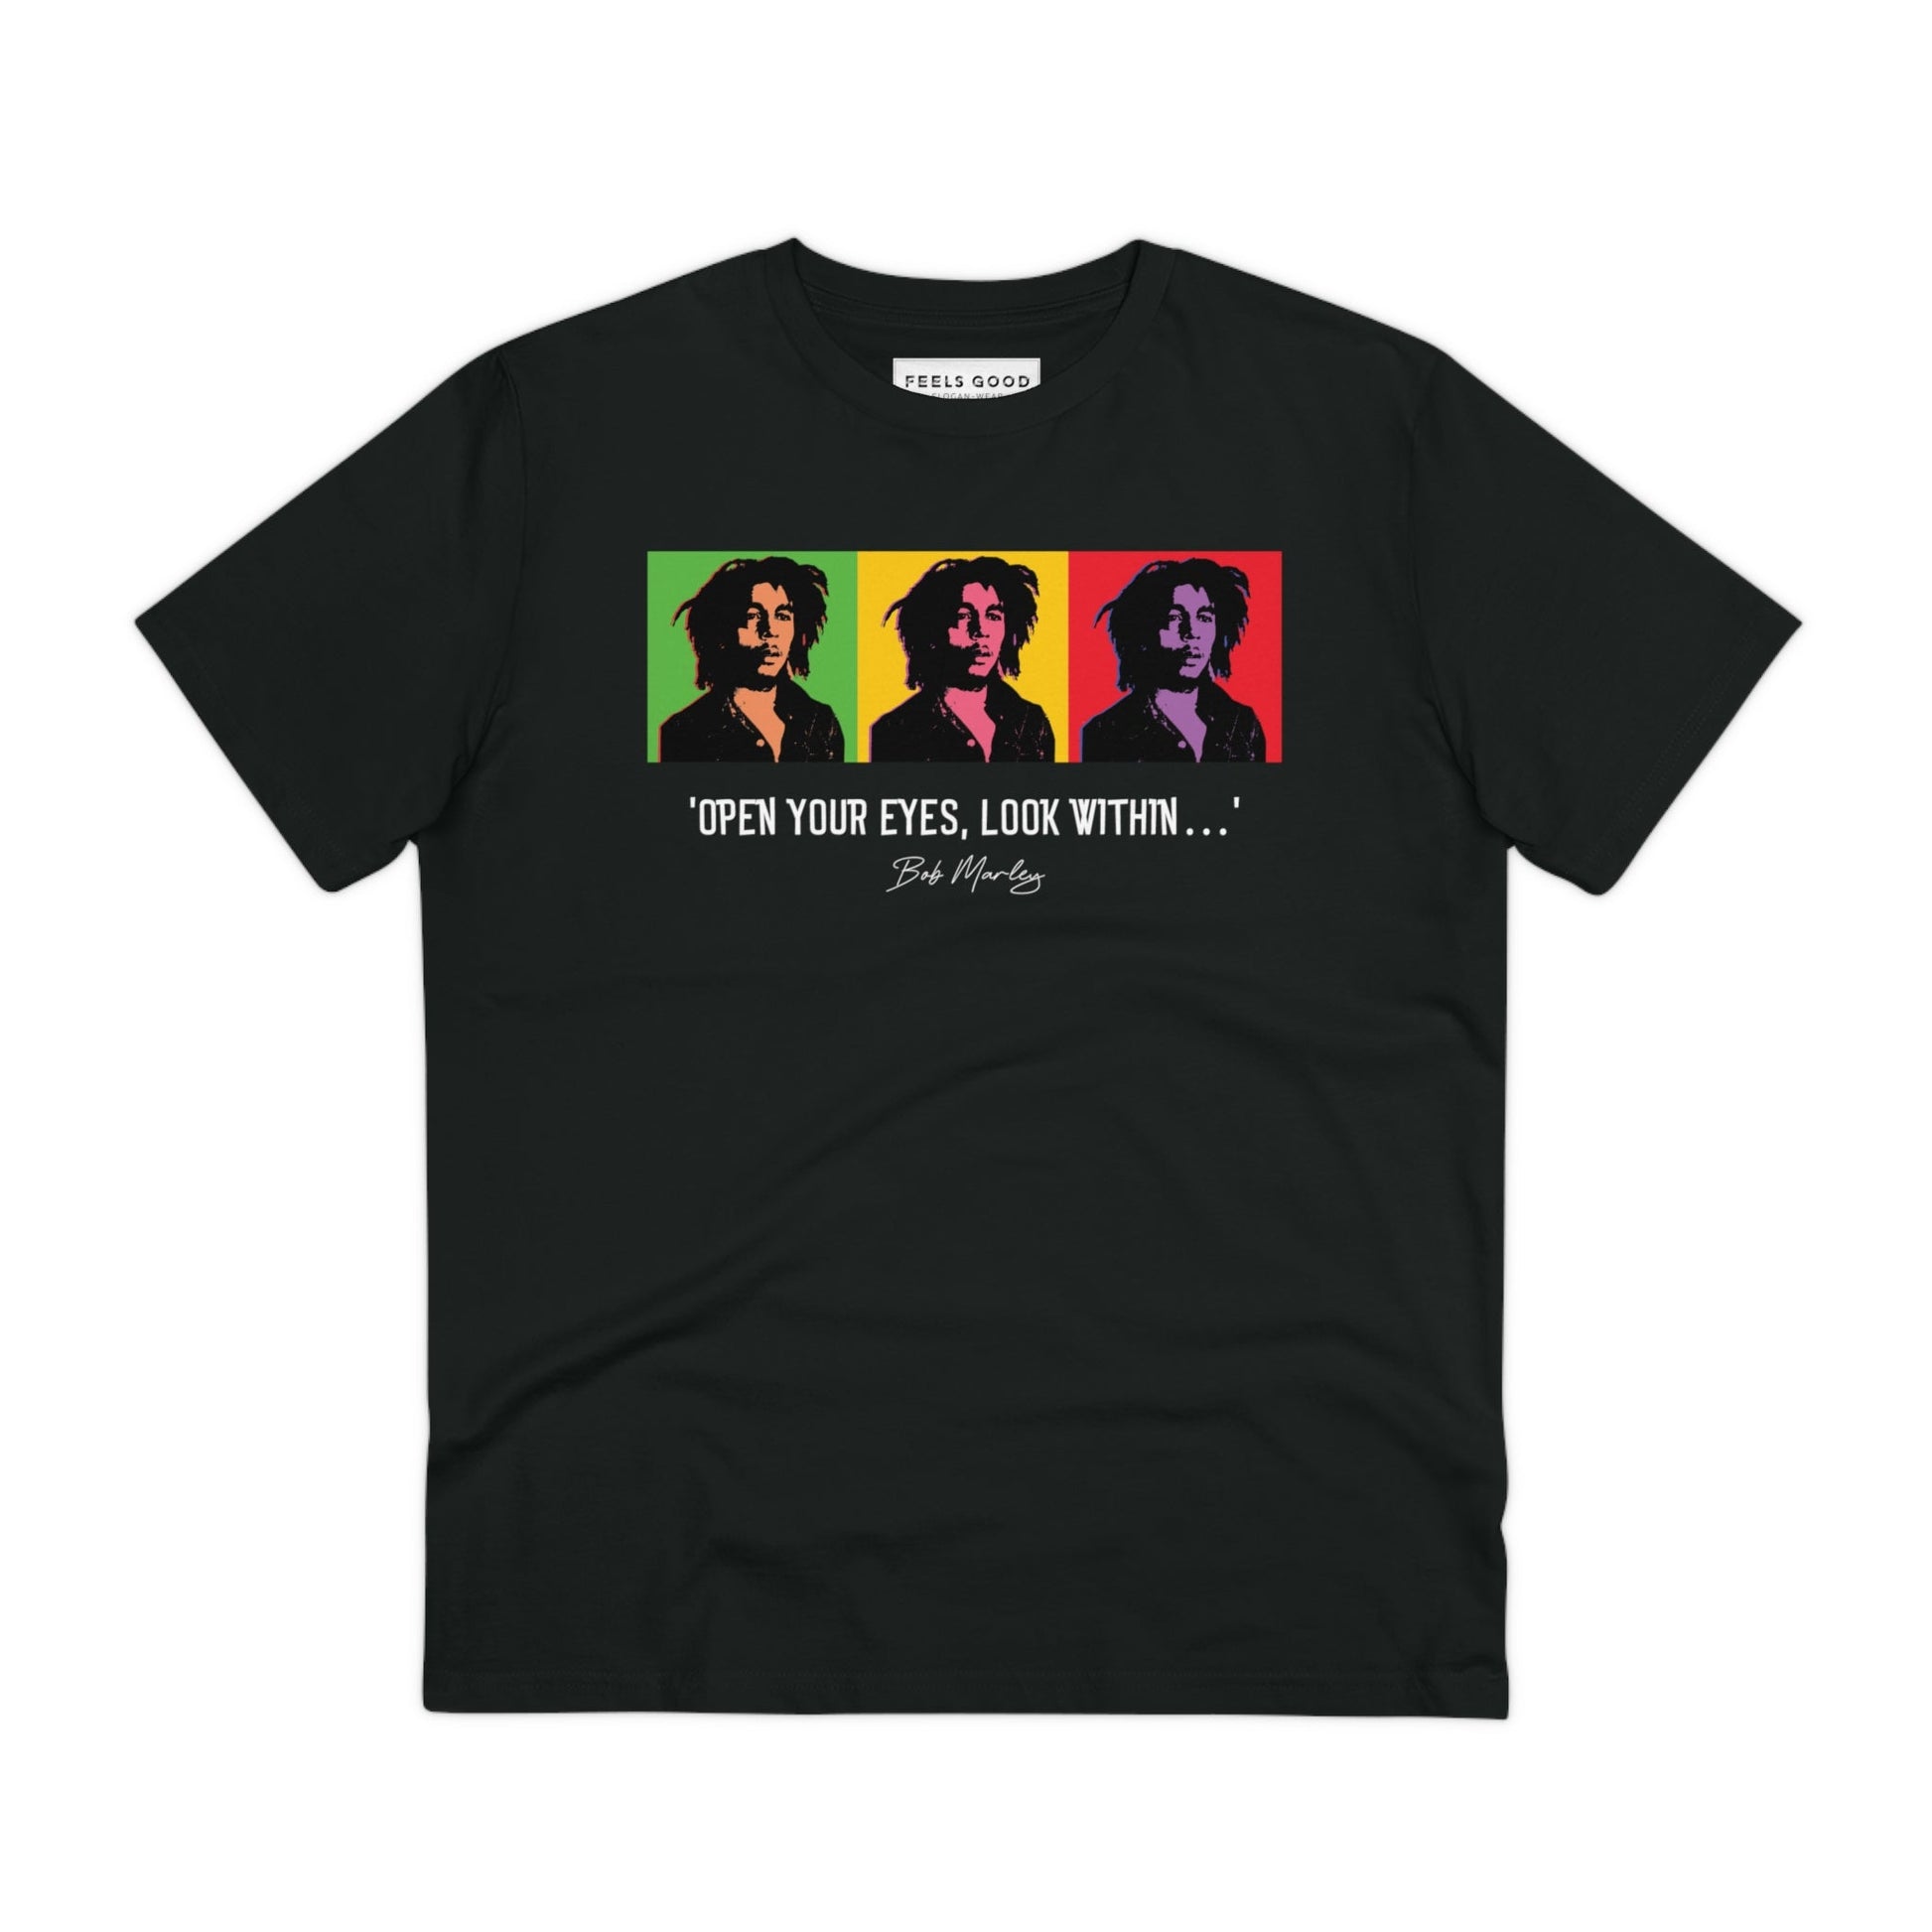 Famous Quotes 'Bob Marley' Organic Cotton T-shirt - Caribbean Tshirt